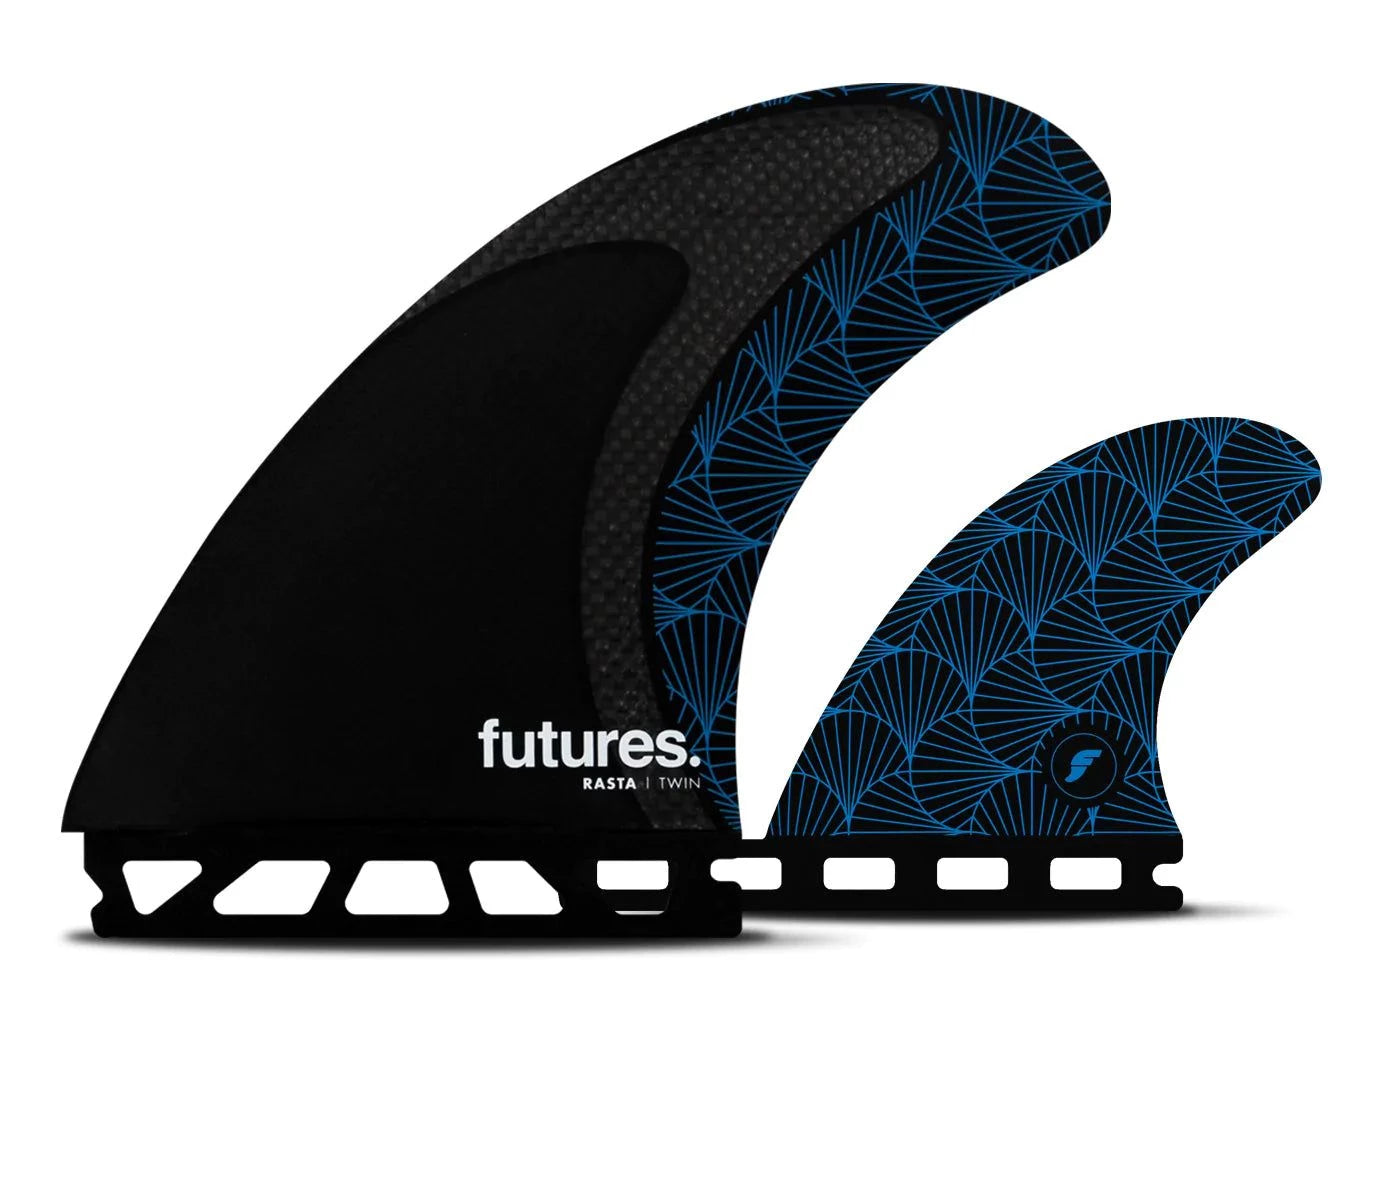 Futures Rasta Twin +1-Futures-bamboo,dave rastovich,fins,futures,rasta,speed control,surfboard